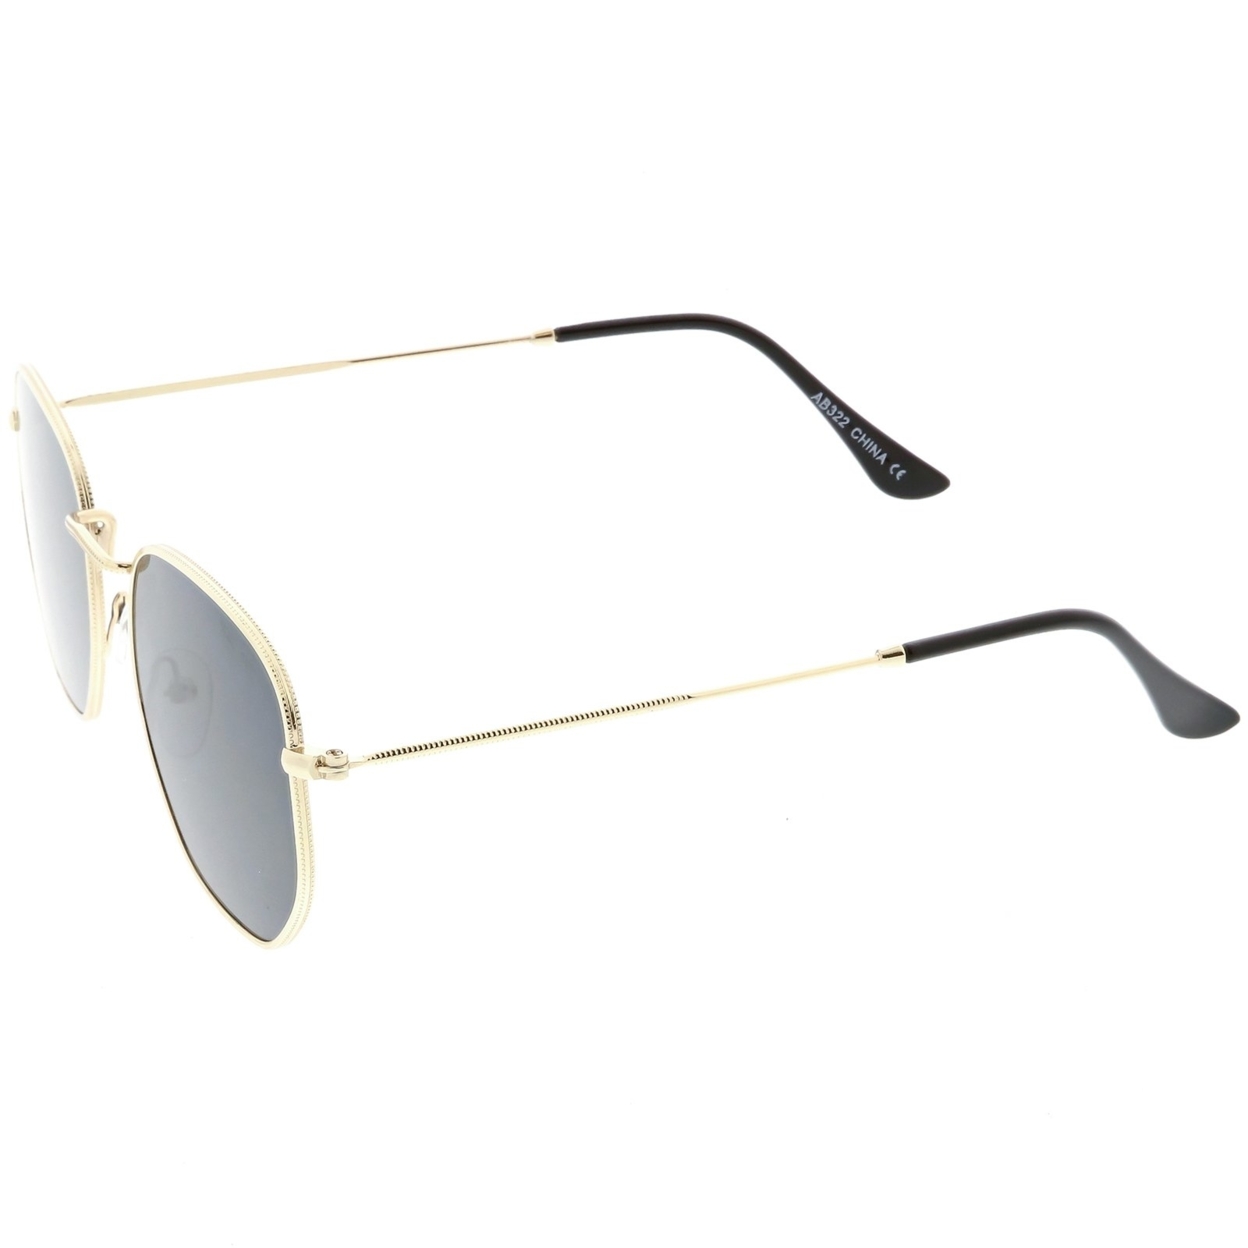 Modern Metal Geometric Sunglasses Slim Arms Neutral Flat Lens 51mm - Gold / Brown